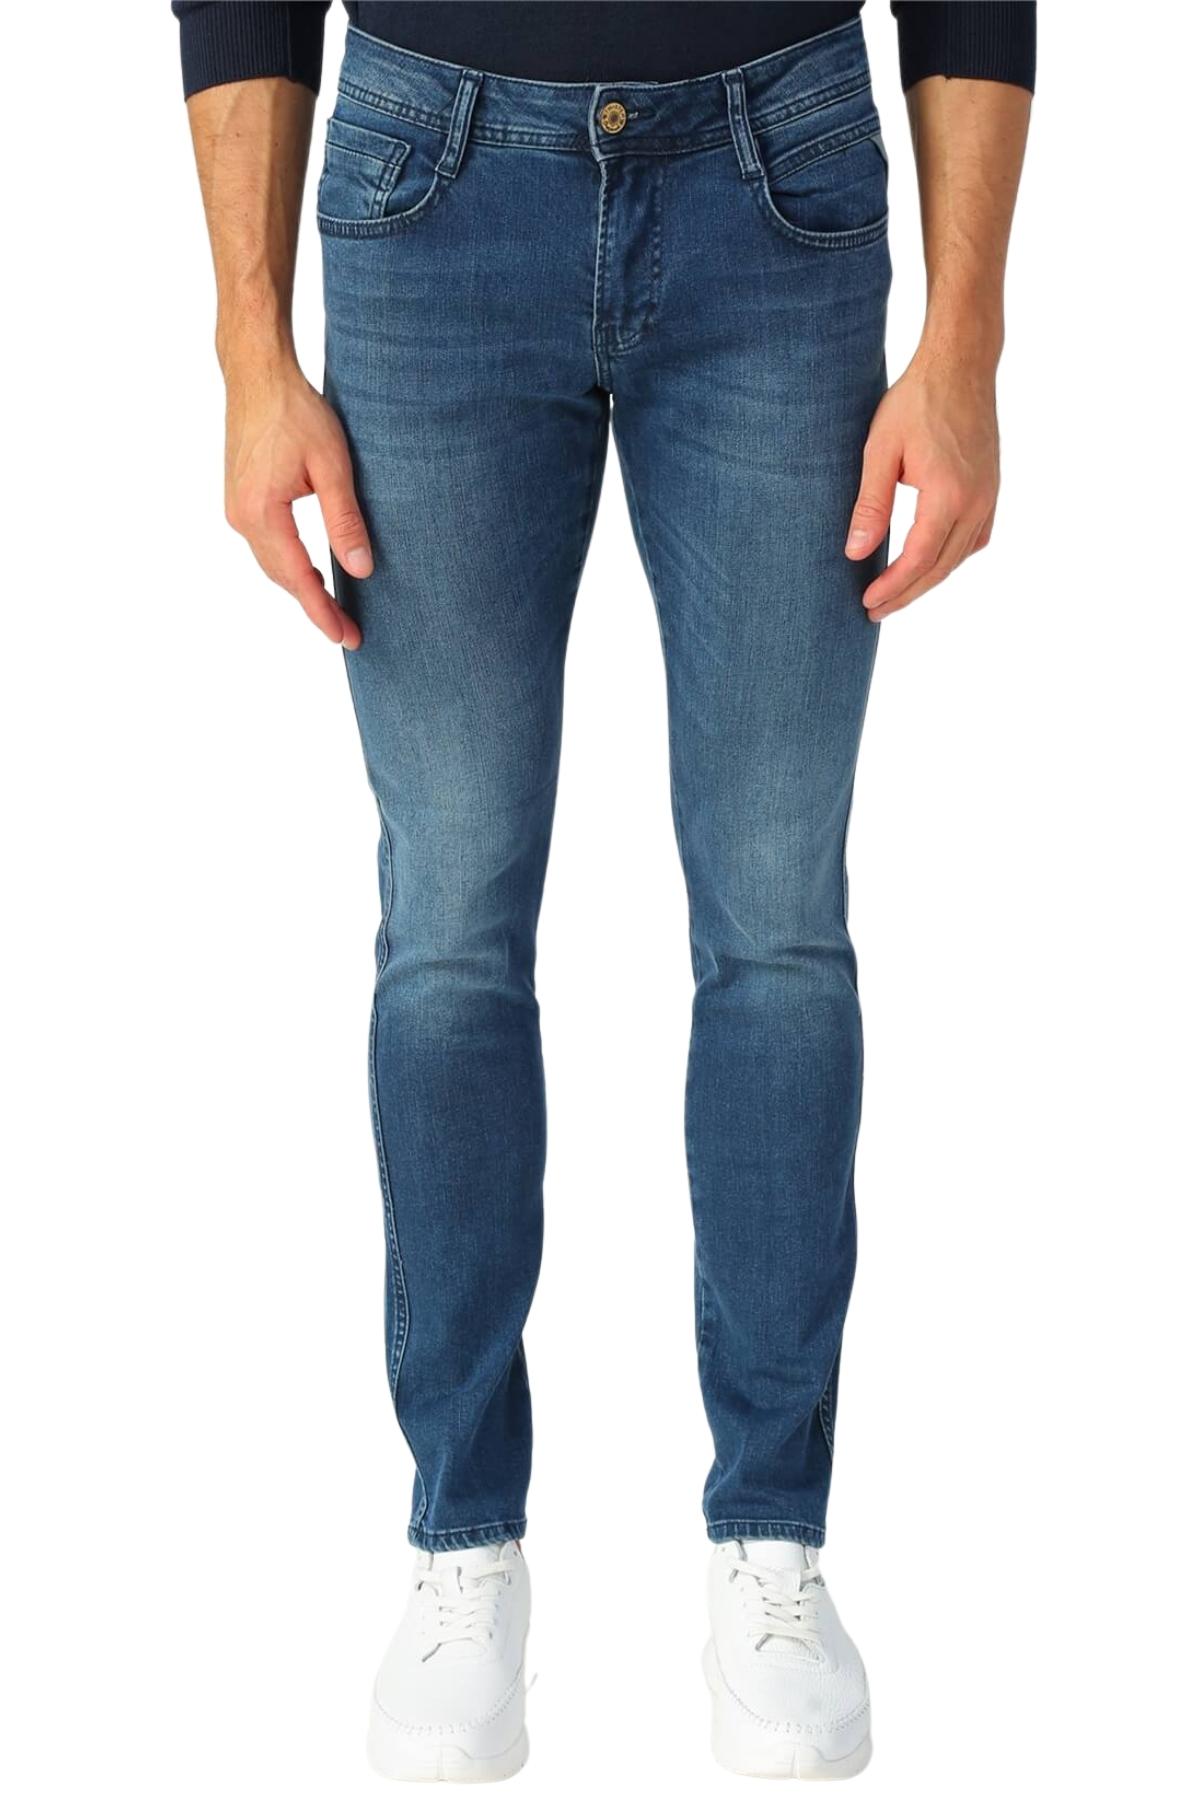 Twister Jeans PANAMA 512-03 Erkek Denim Pantolon